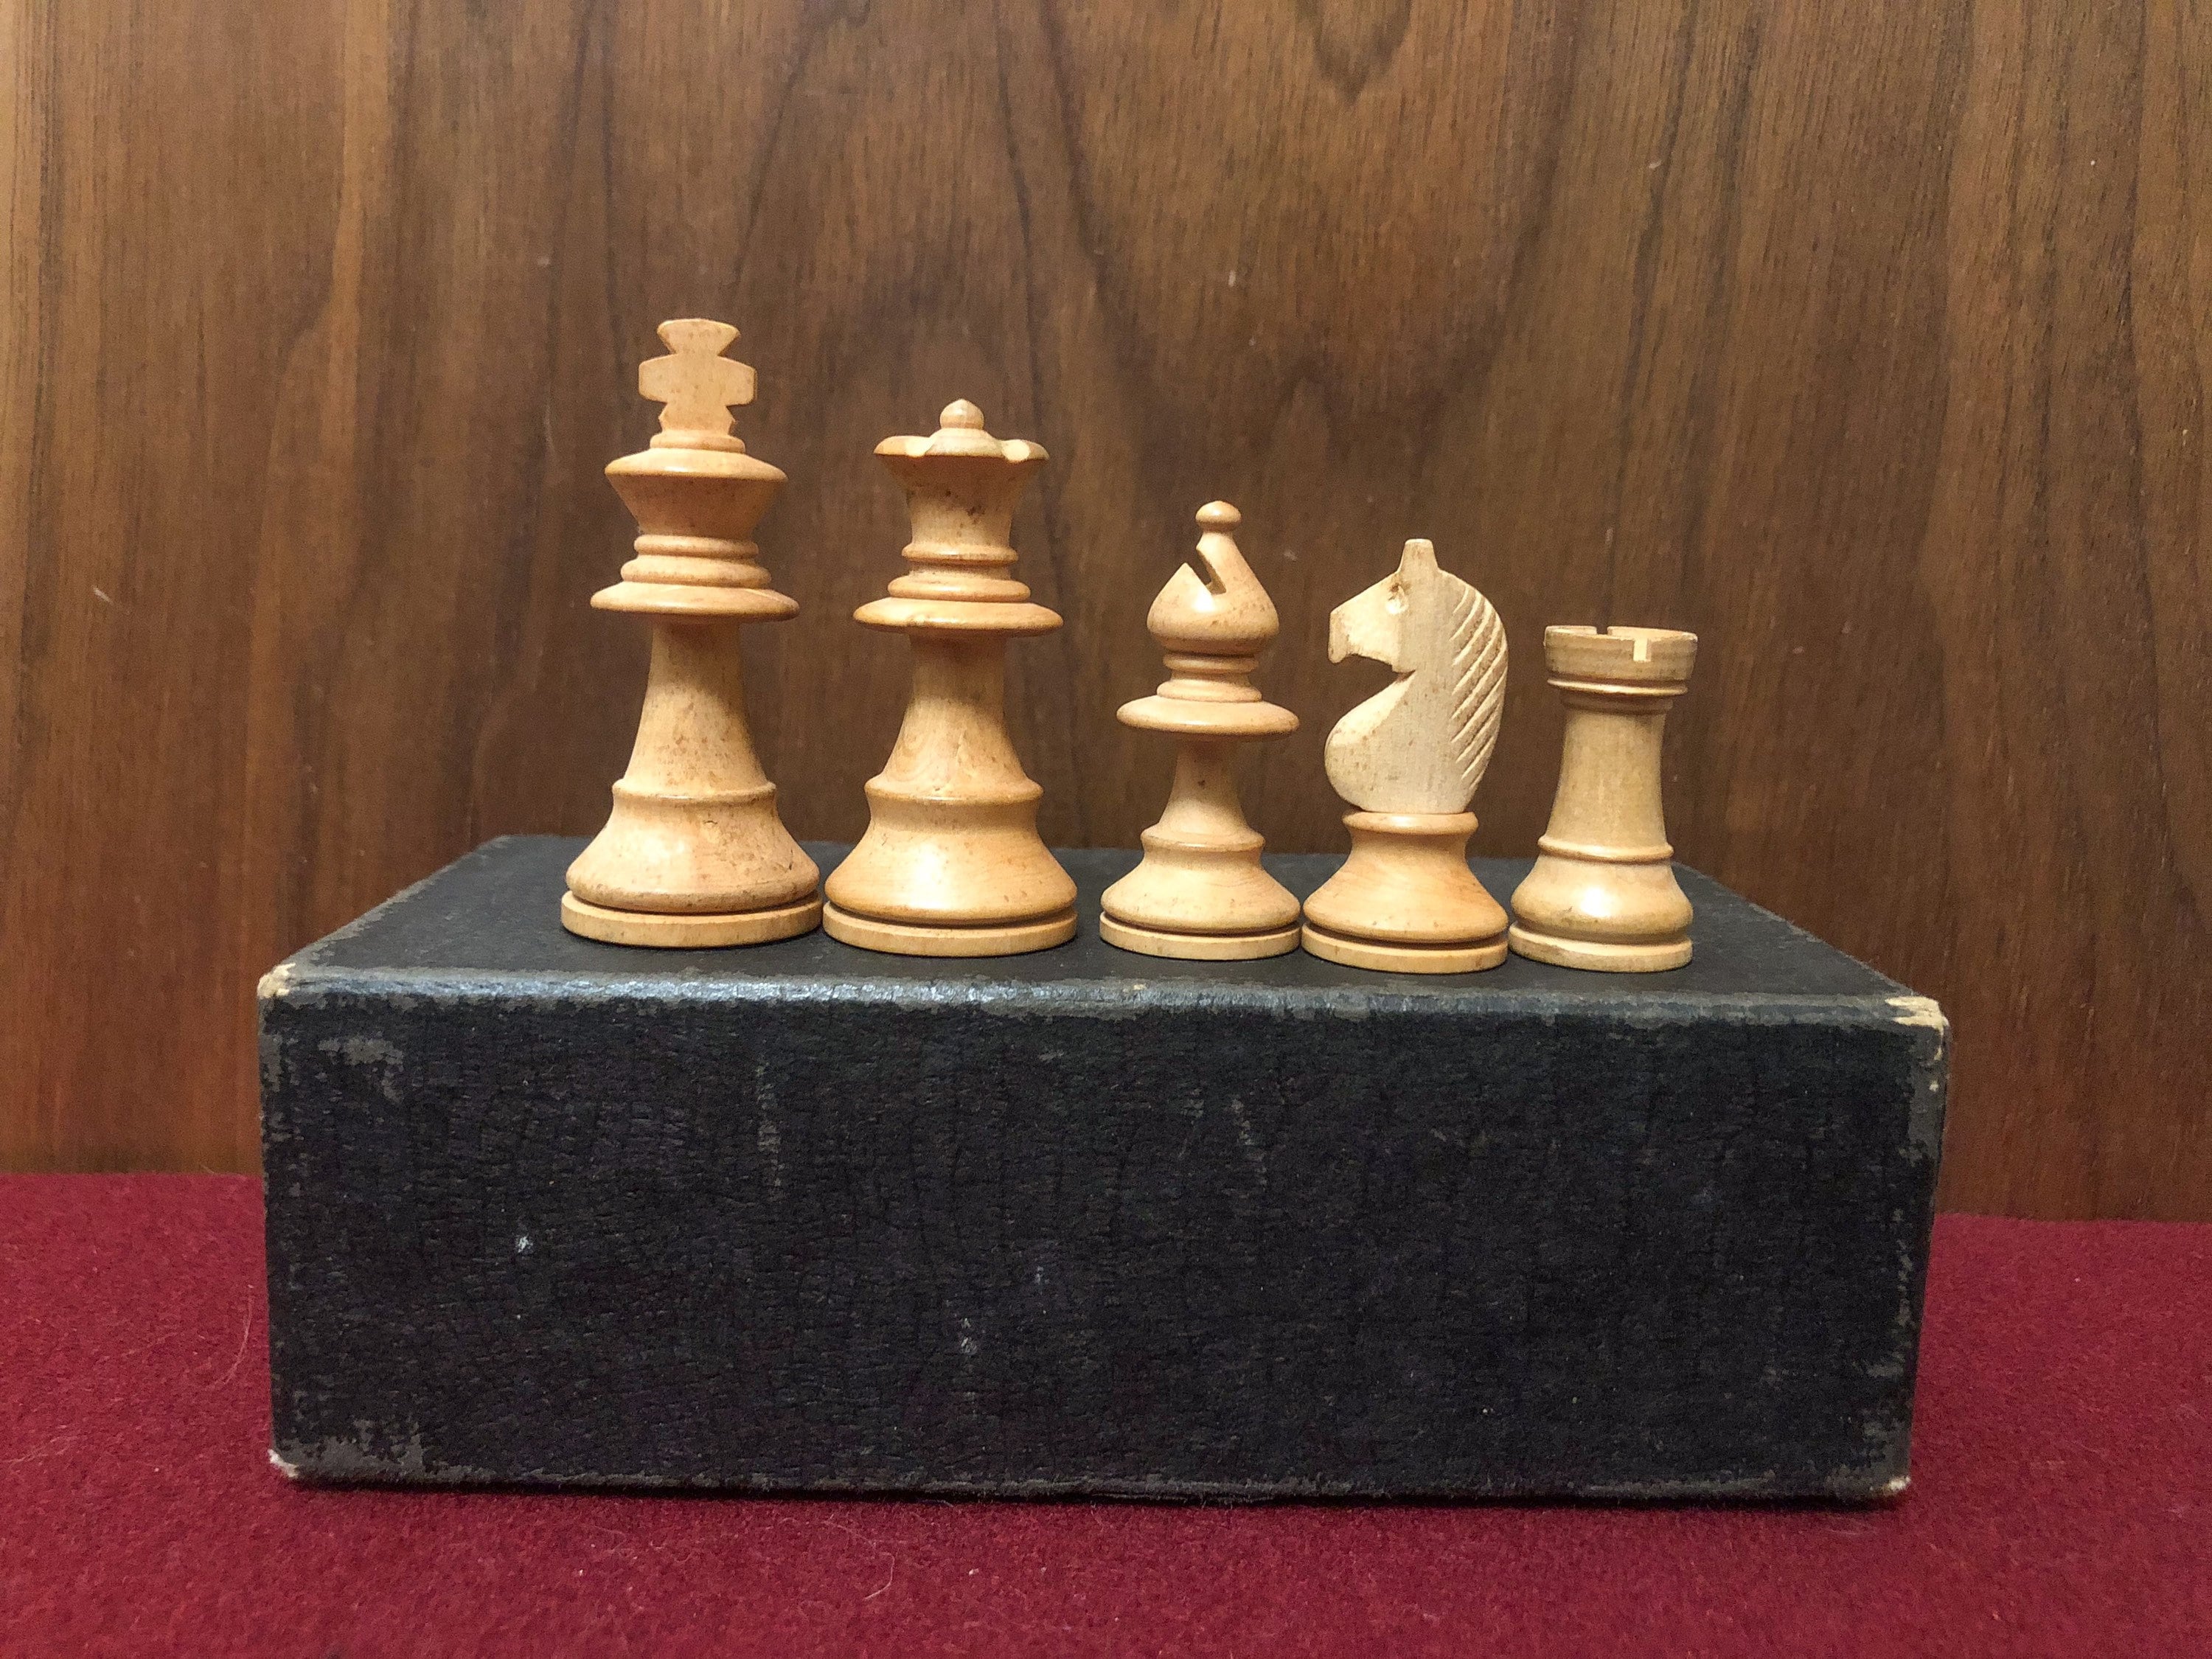 Paul Morphy Staunton 3.5" Chessmen in Golden Rose & Box Wood with Storage Box 